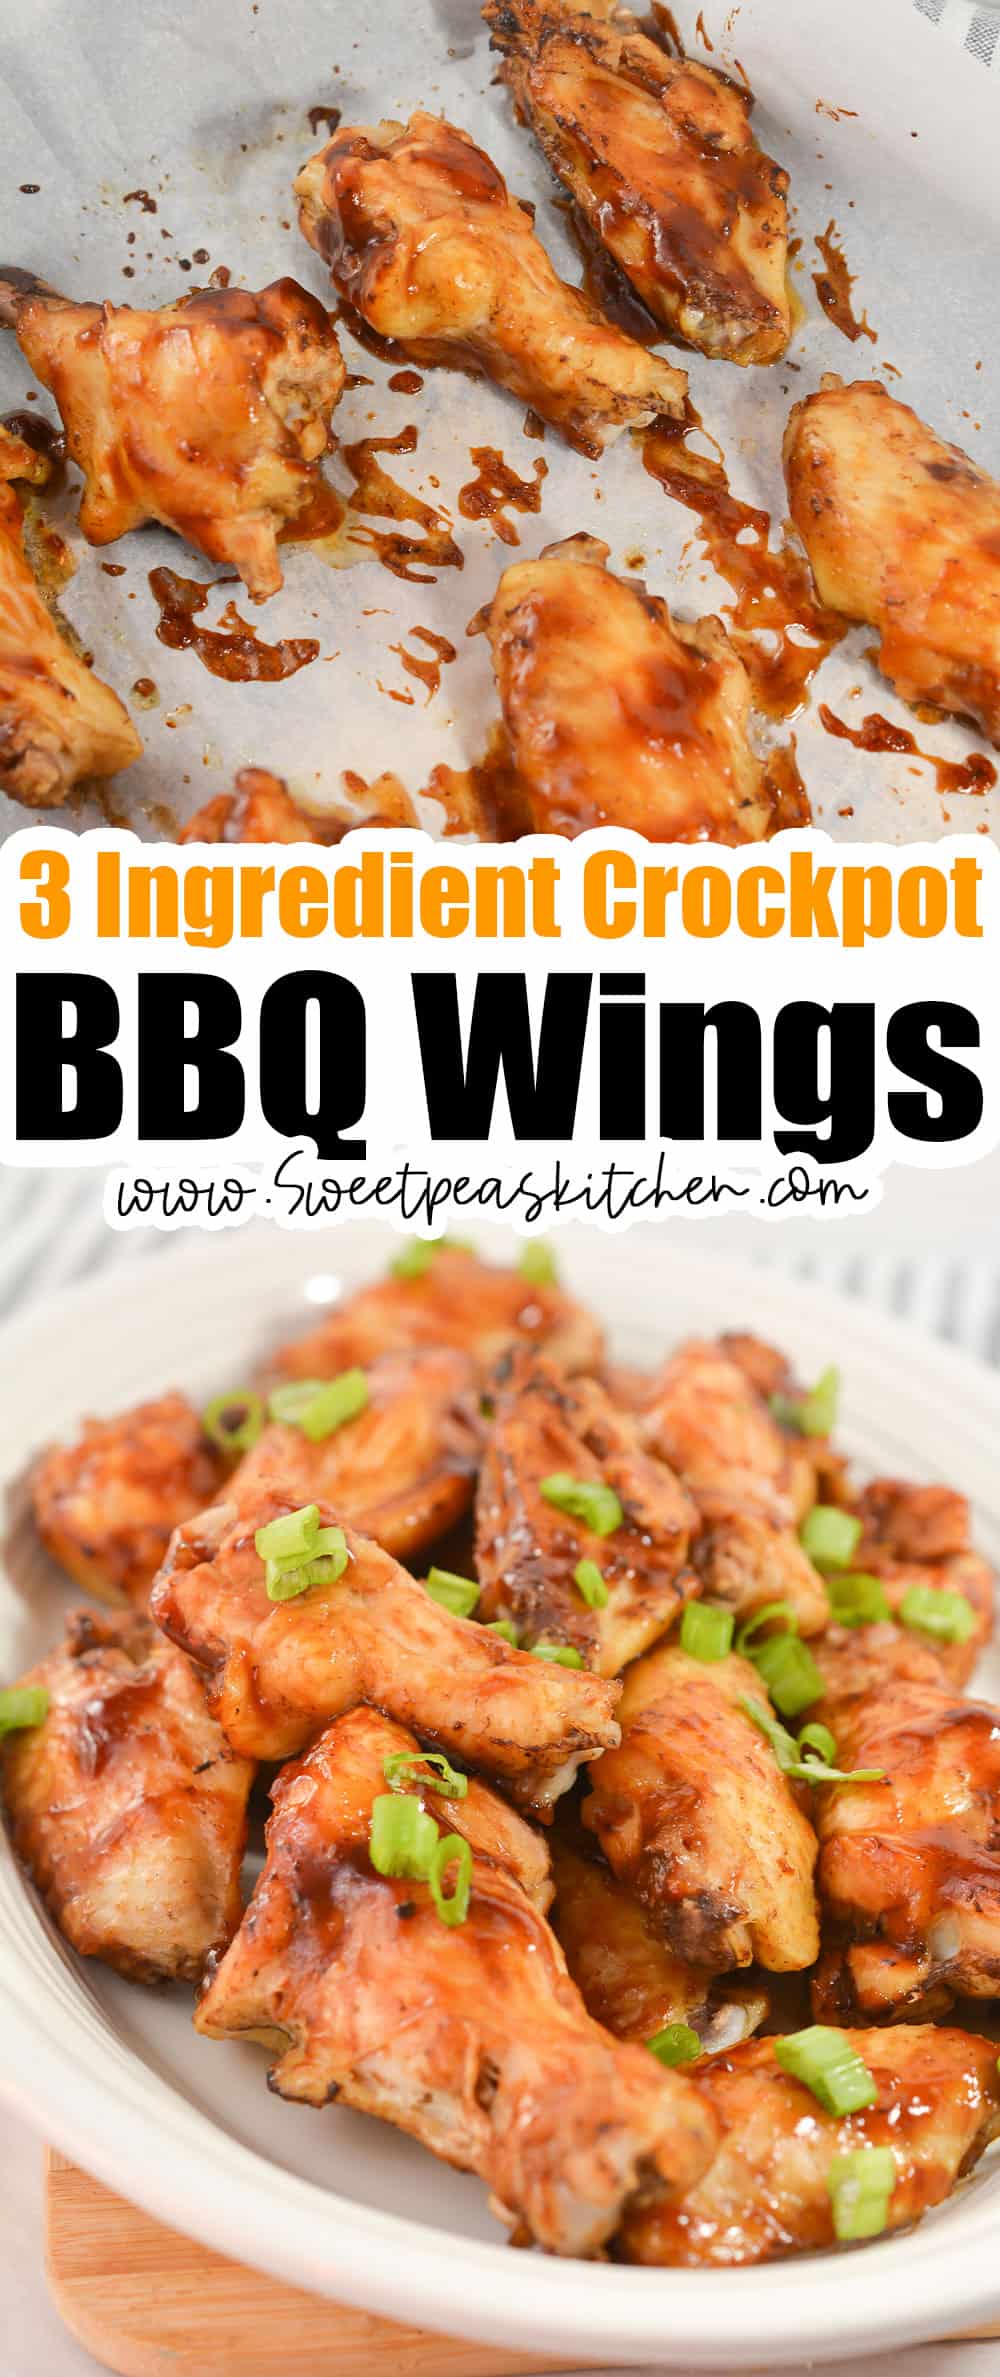 3 Ingredient Crockpot BBQ Wings